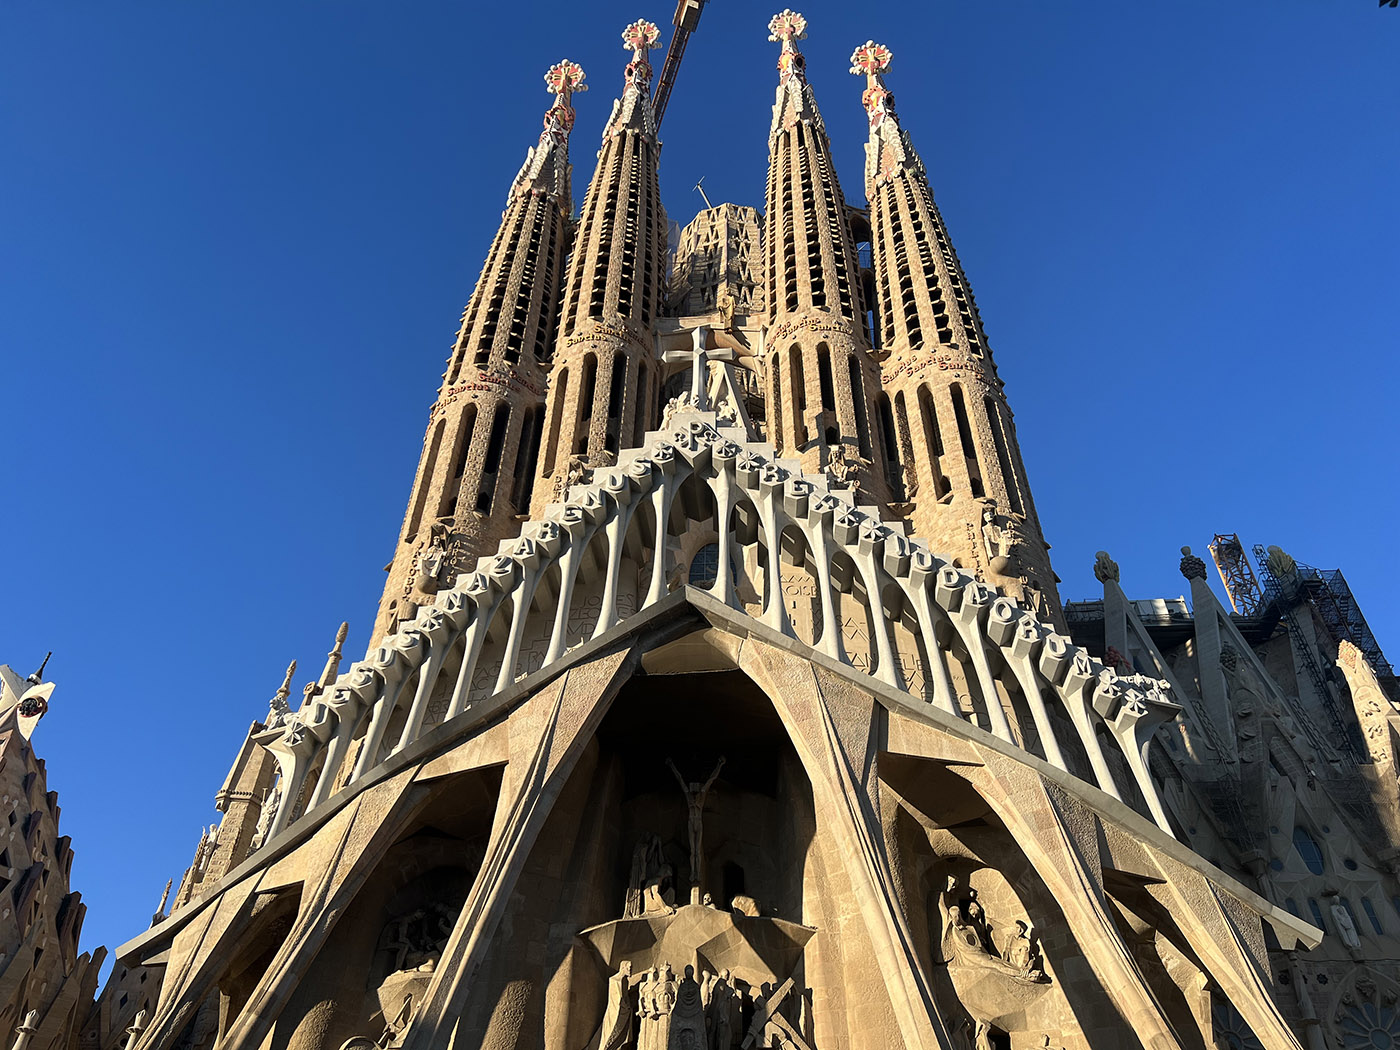 La Sagrada Familia. Barcelona, Spain. Credit: Carry on Caro